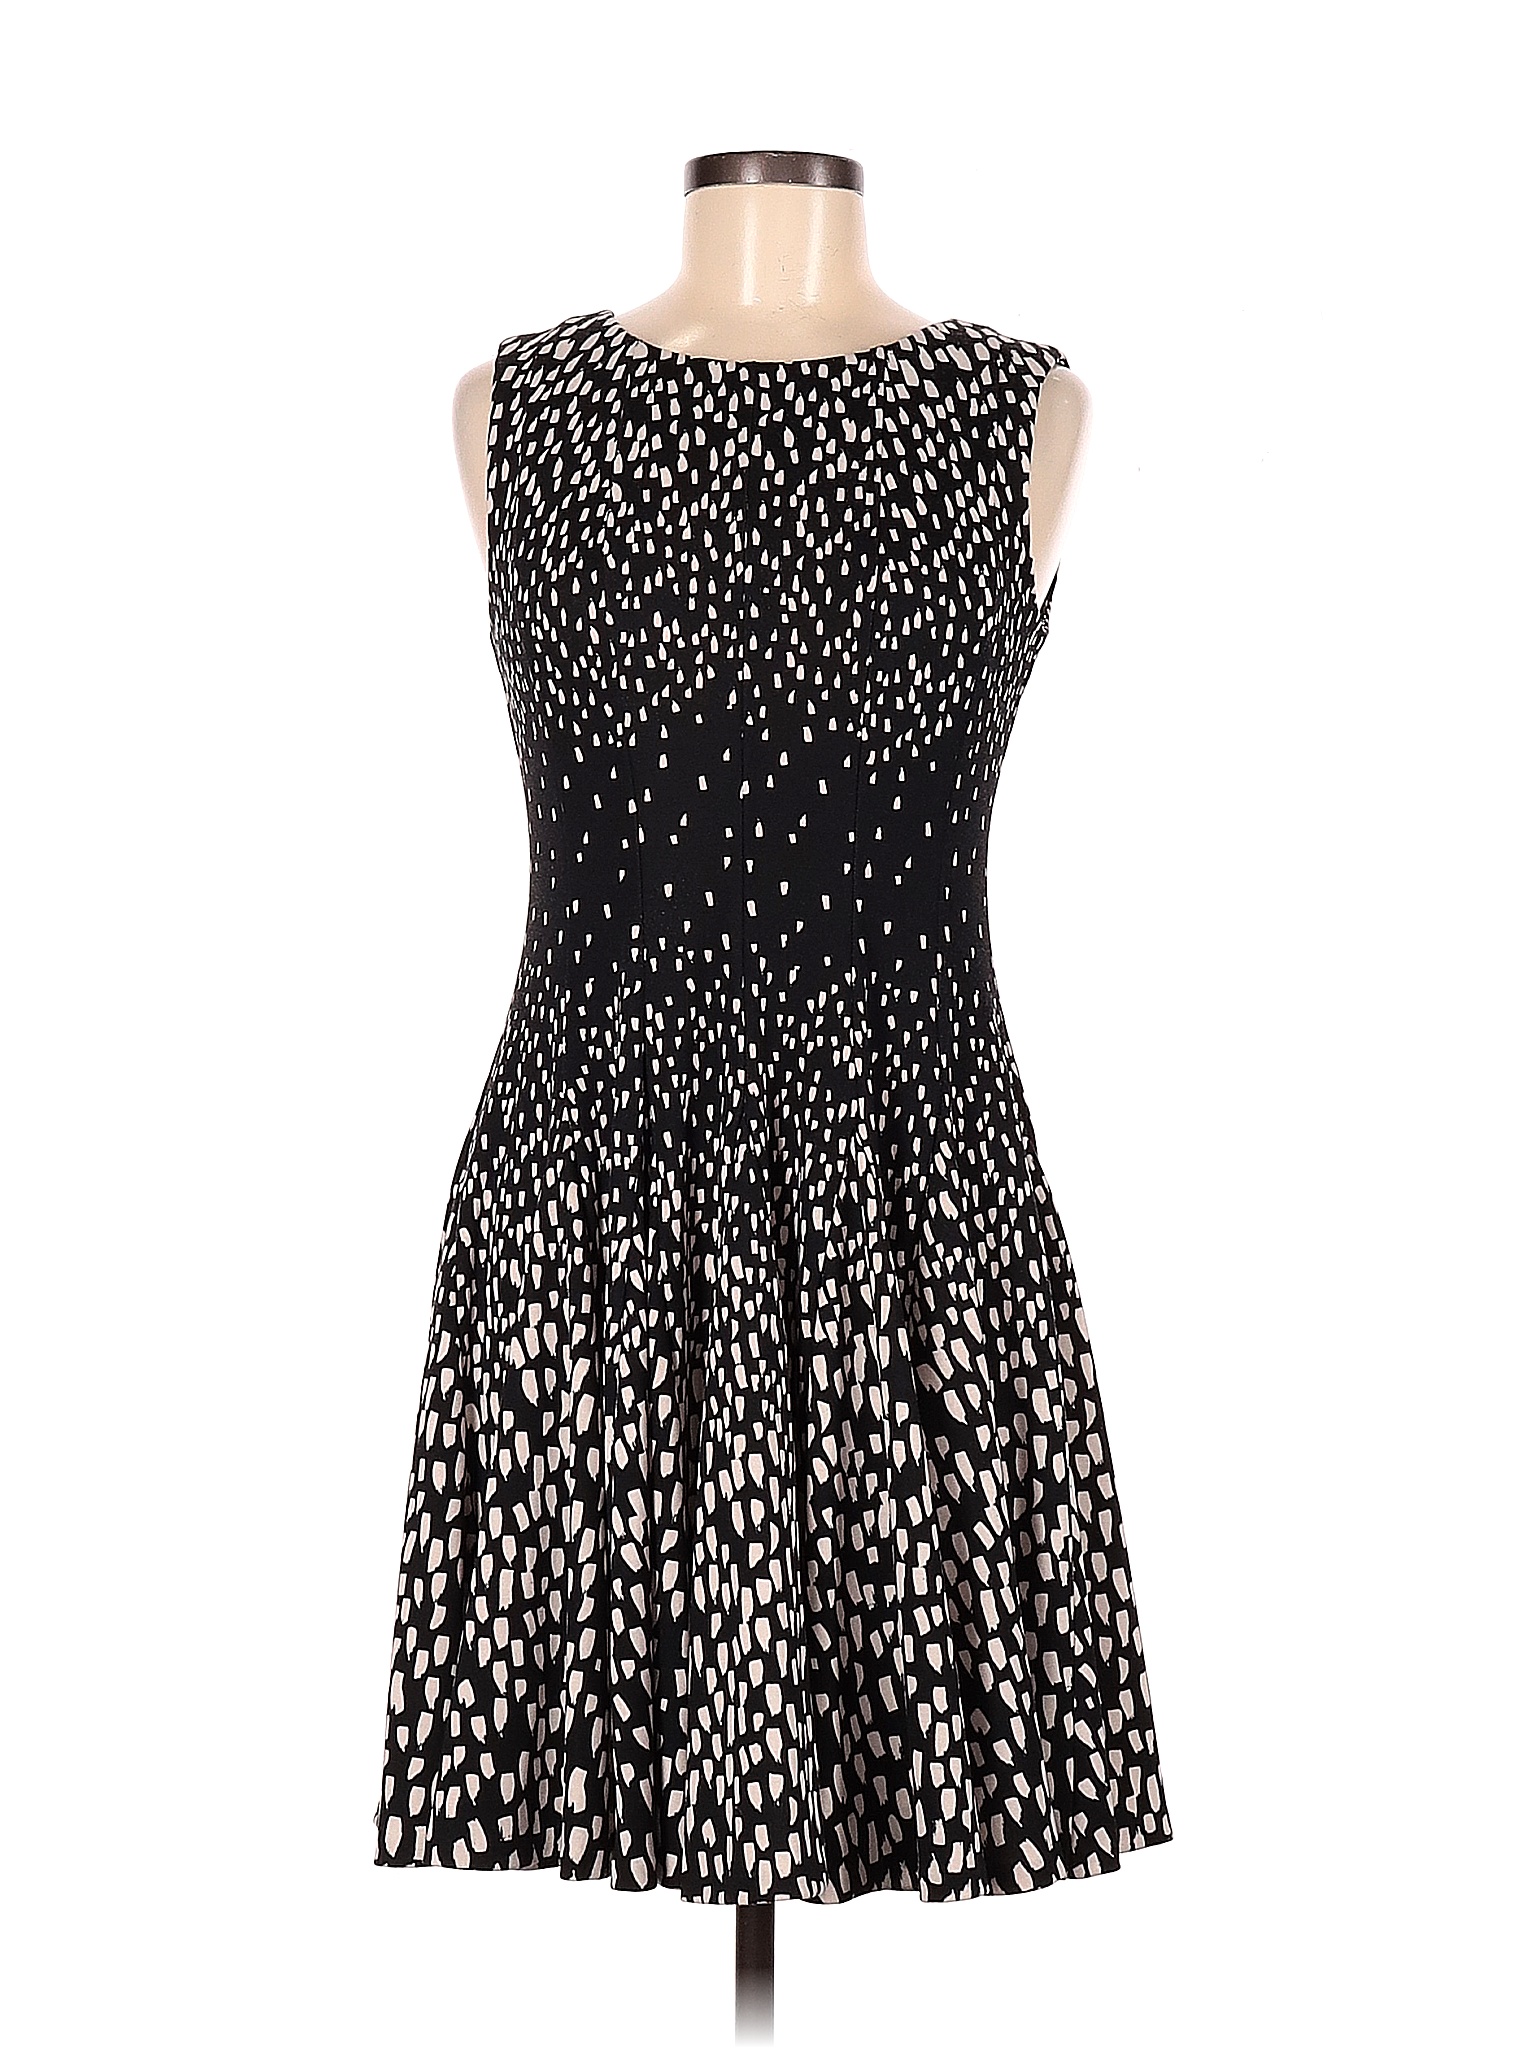 Eliza J Black Casual Dress Size 6 - 80% off | thredUP